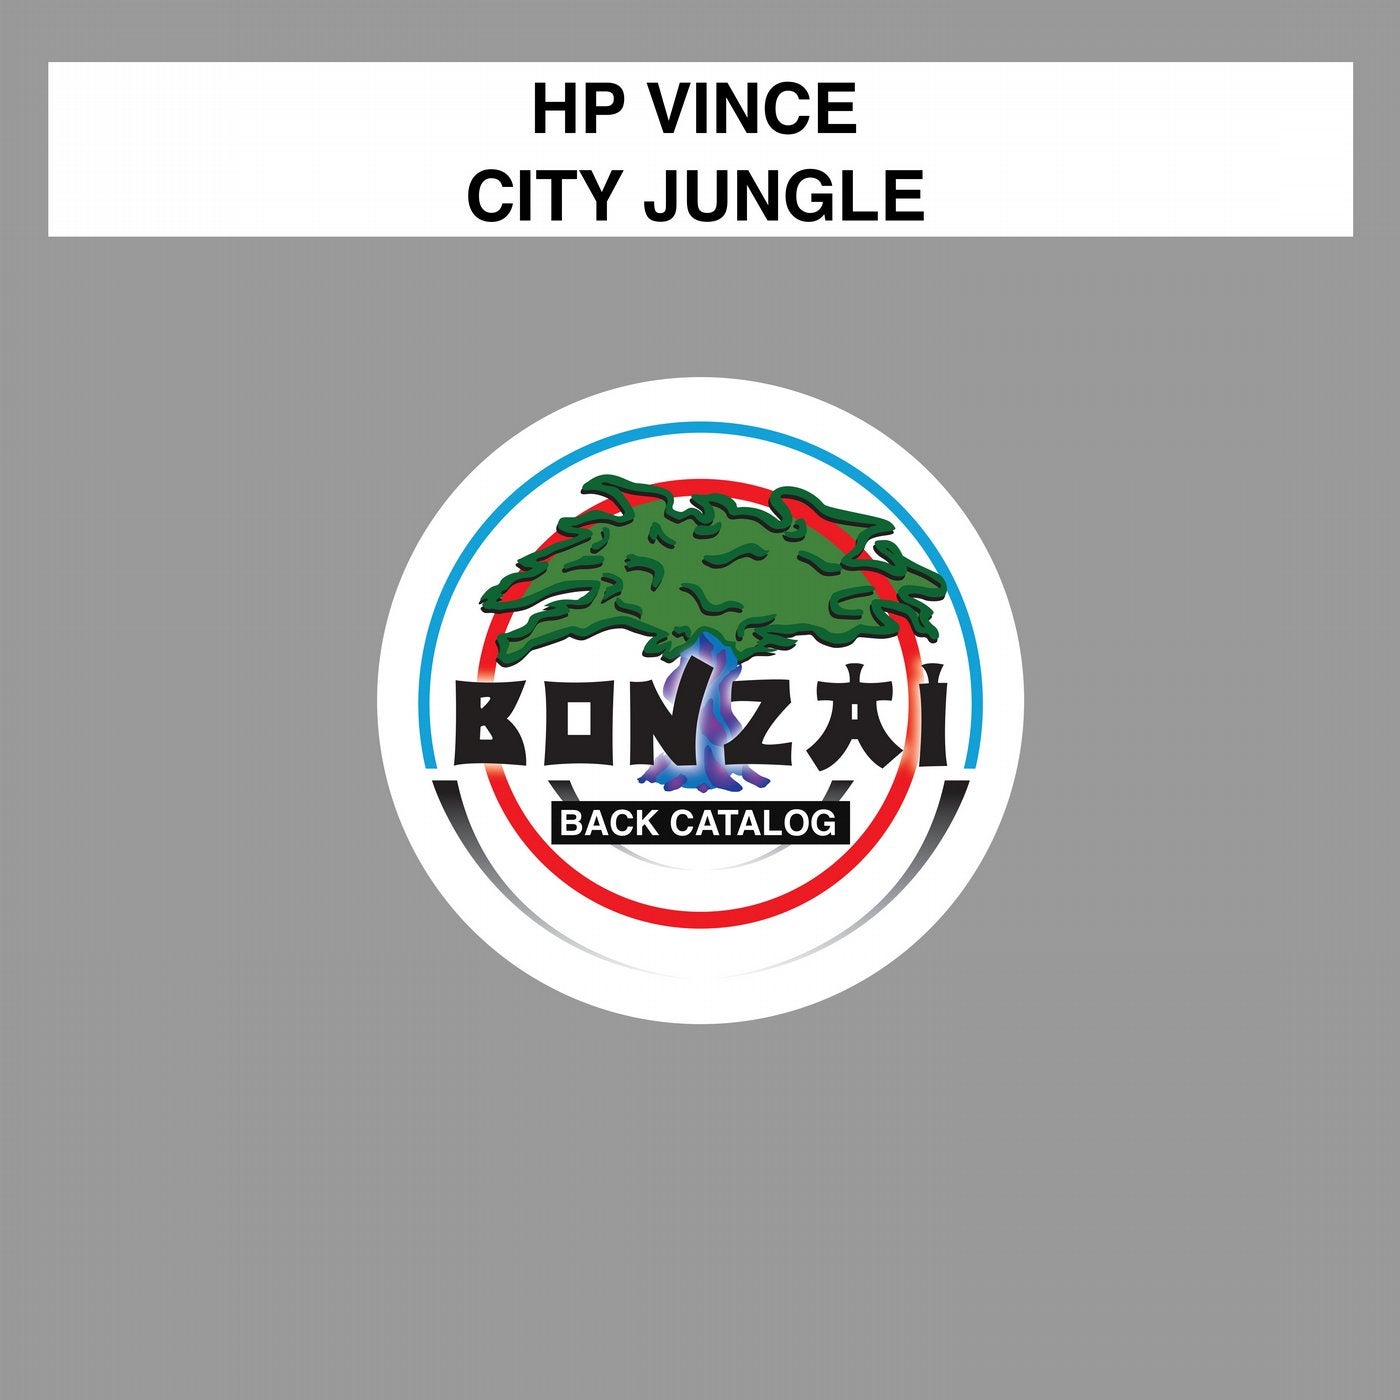 City Jungle